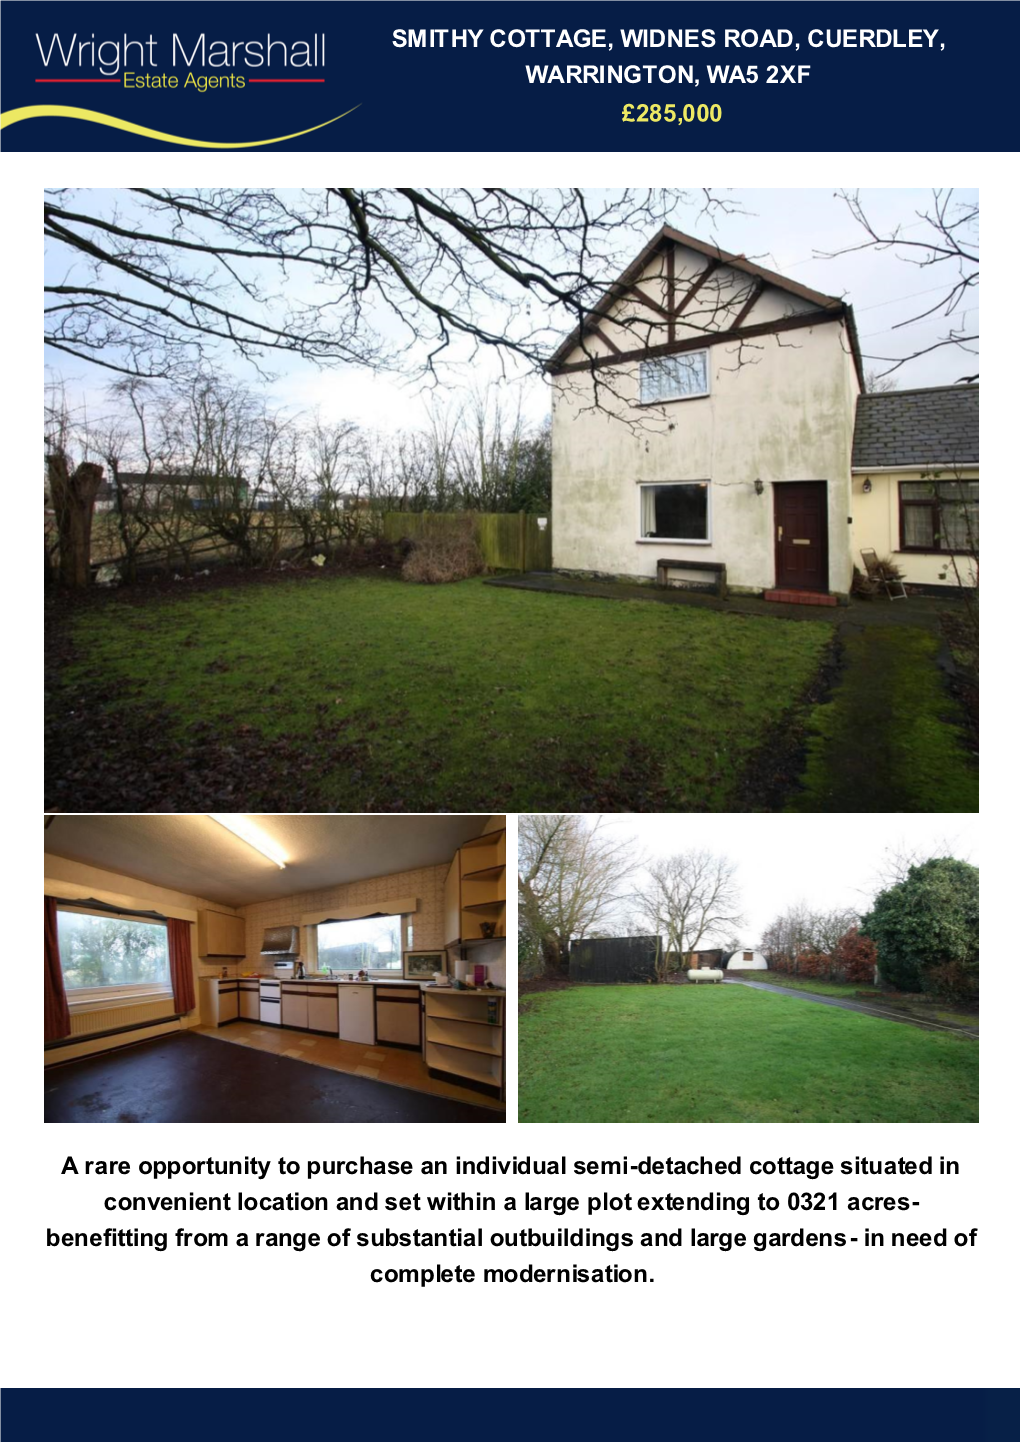 Smithy Cottage, Widnes Road, Cuerdley, Warrington, Wa5 2Xf £285,000